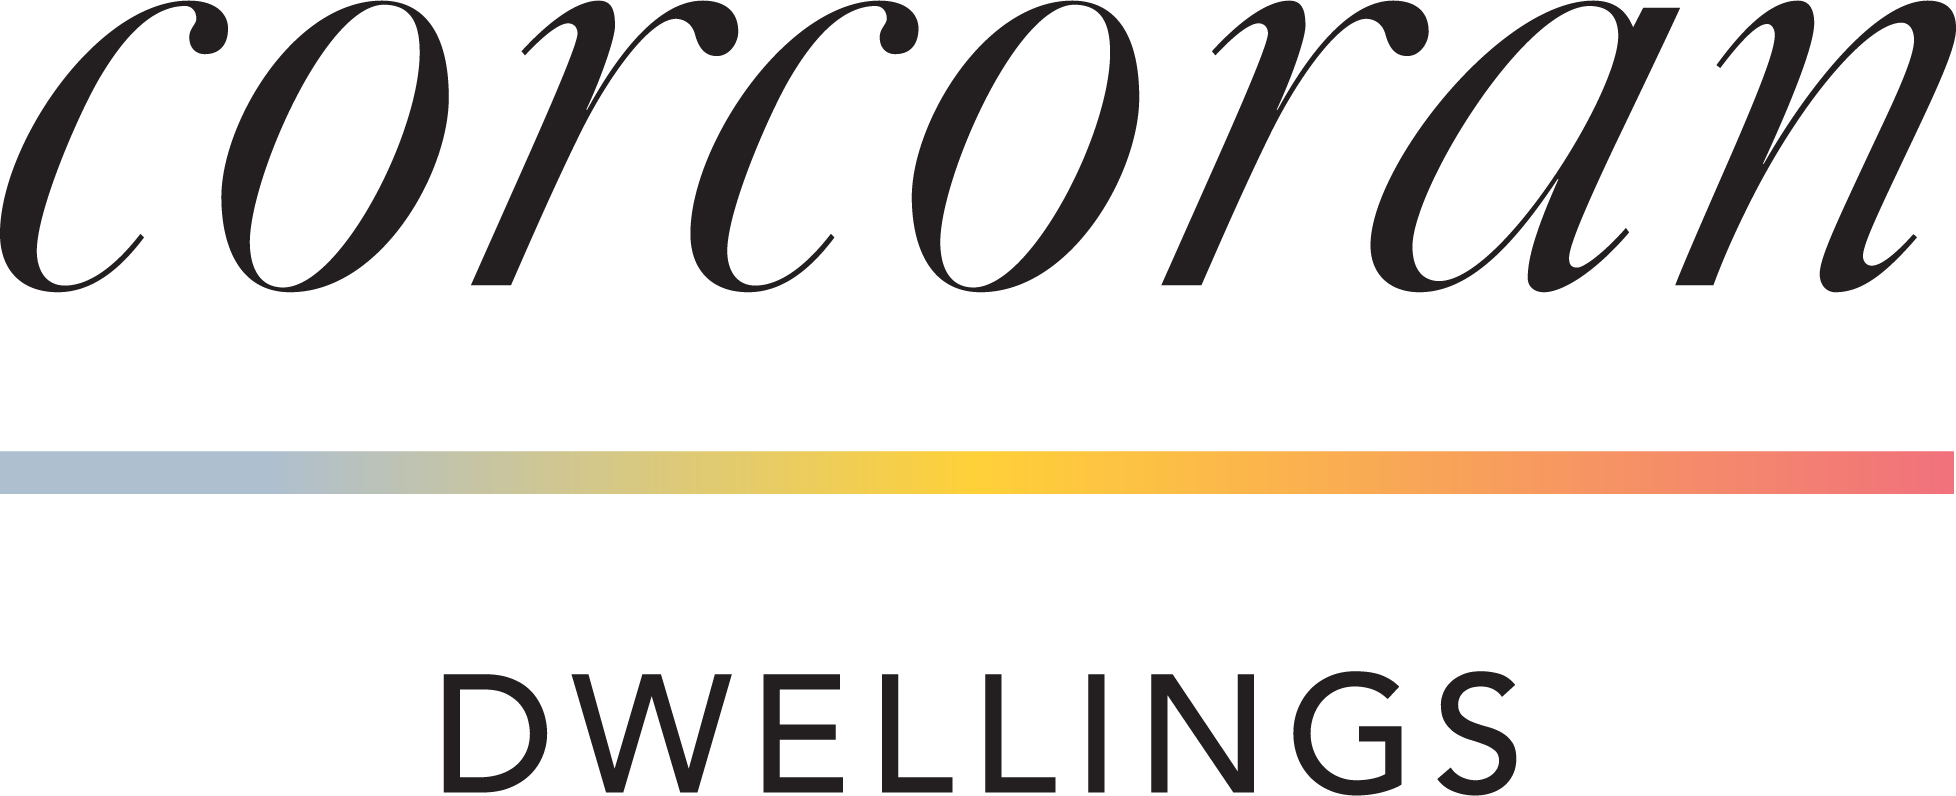 Corcoran Dwellings logo